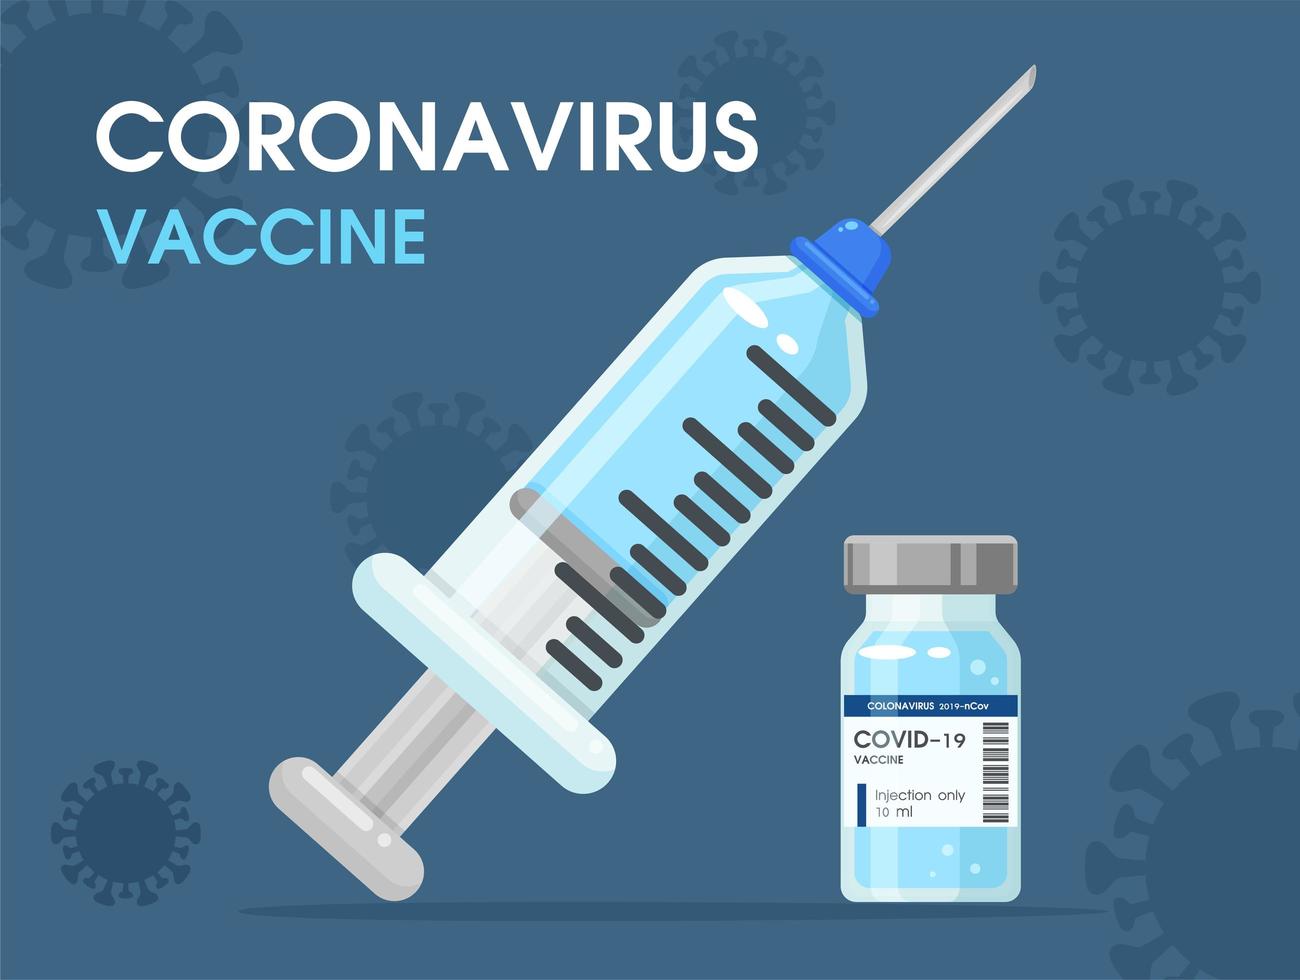 vaccin contre le coronavirus en style cartoon vecteur